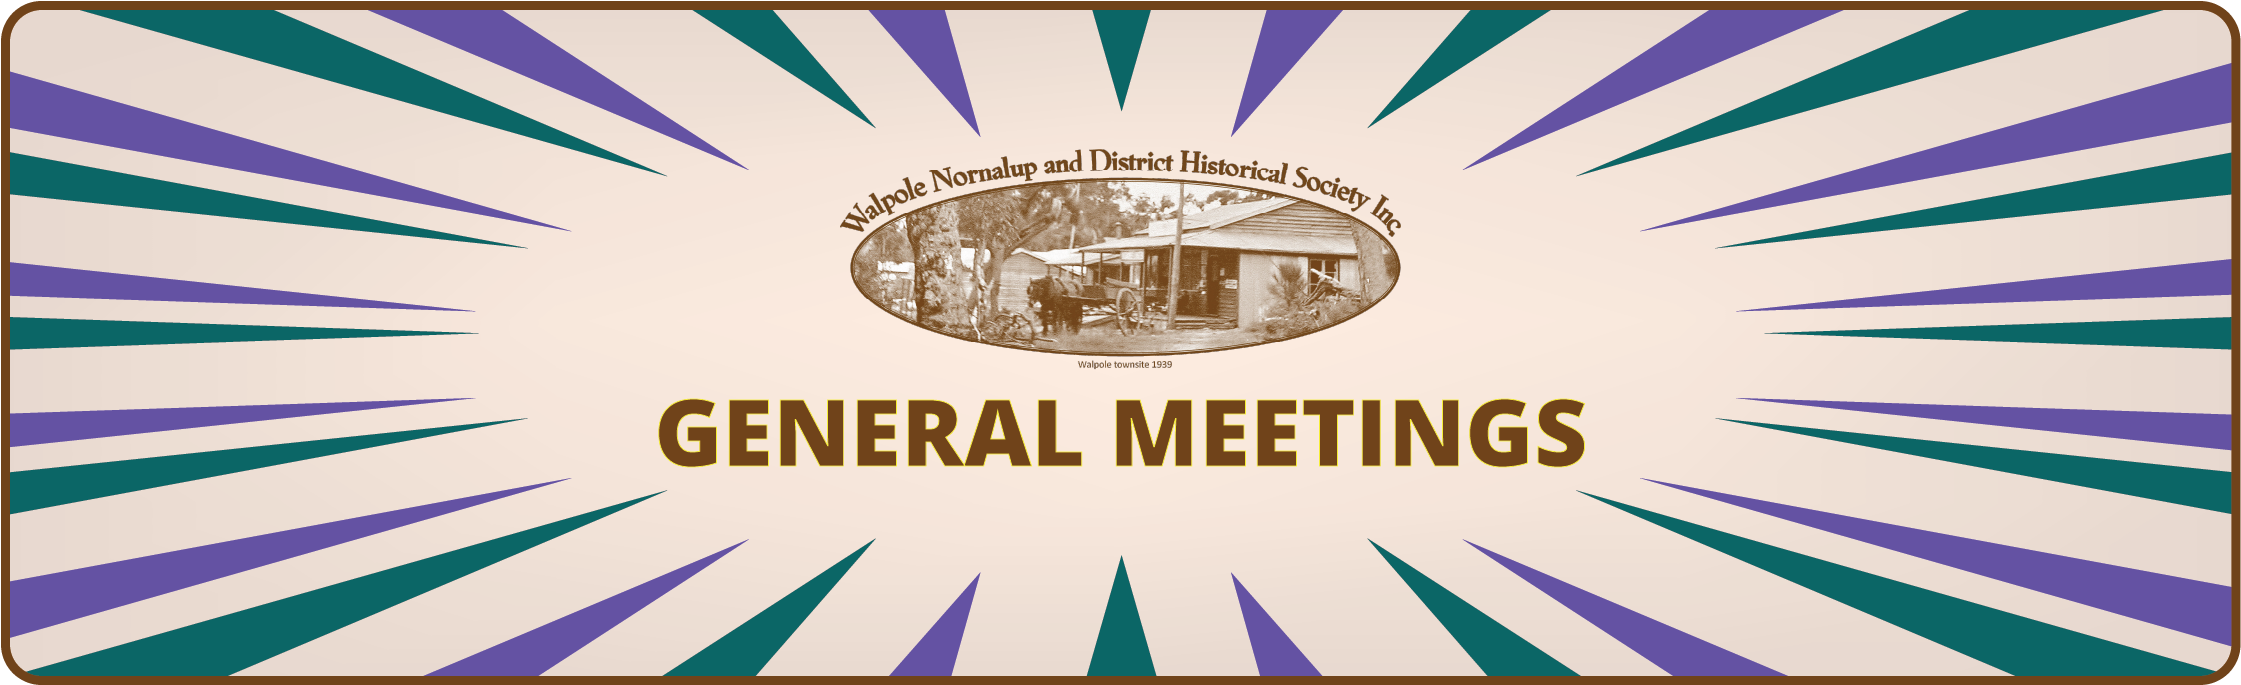 banner for general meetings